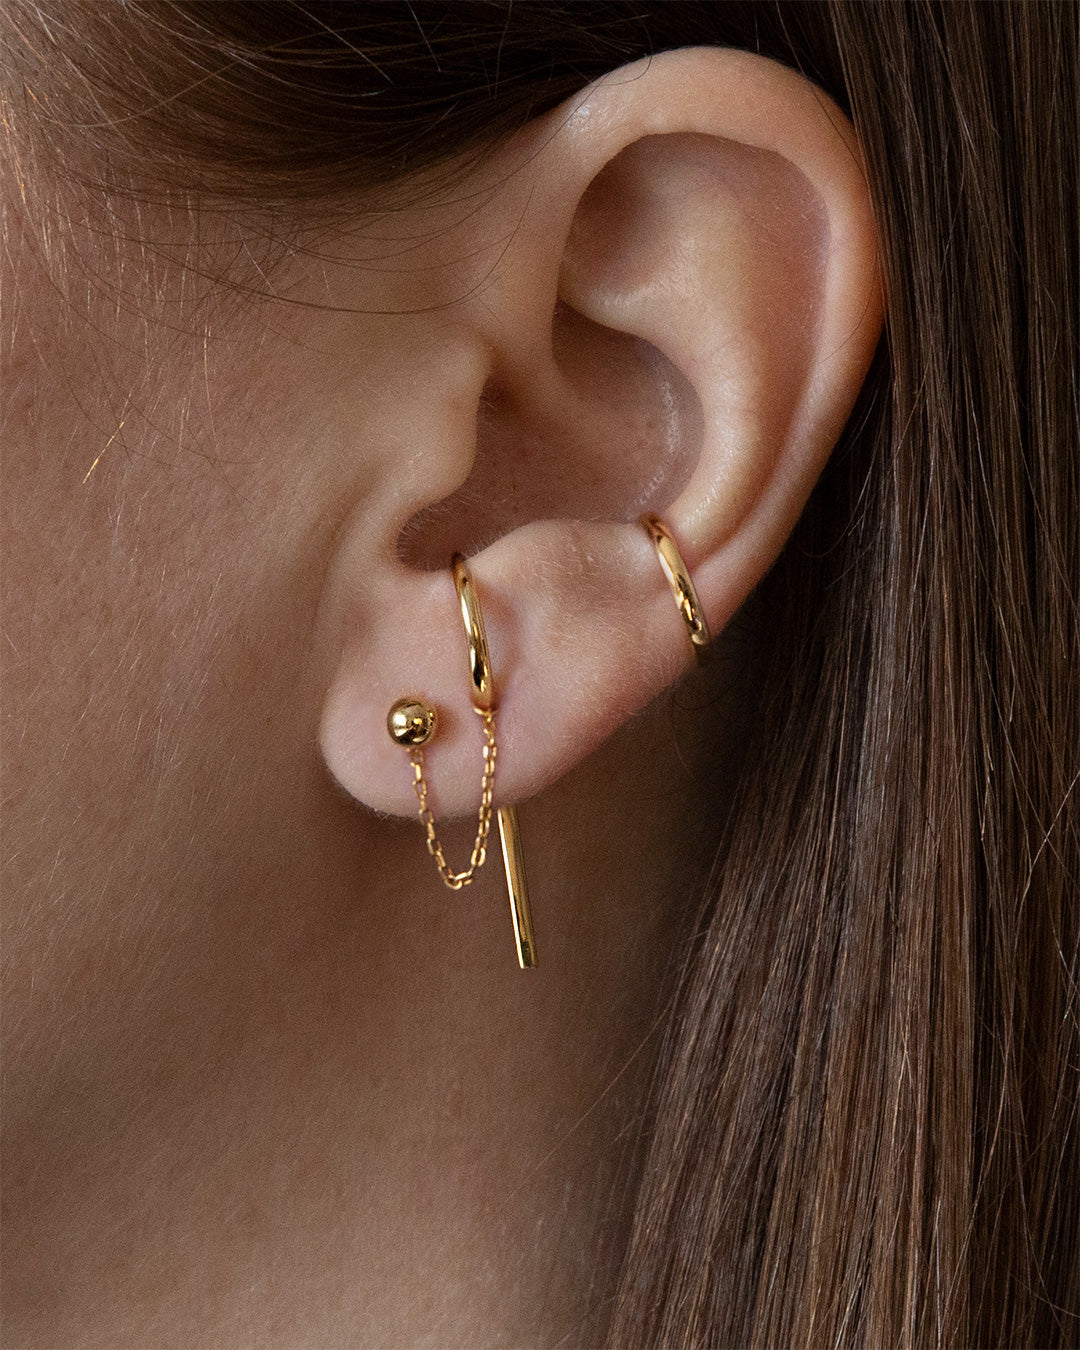 Flmtop Men Women Rhinestone Cartilage Tragus Bar Helix Upper Ear Earring  Stud Jewelry - Walmart.com